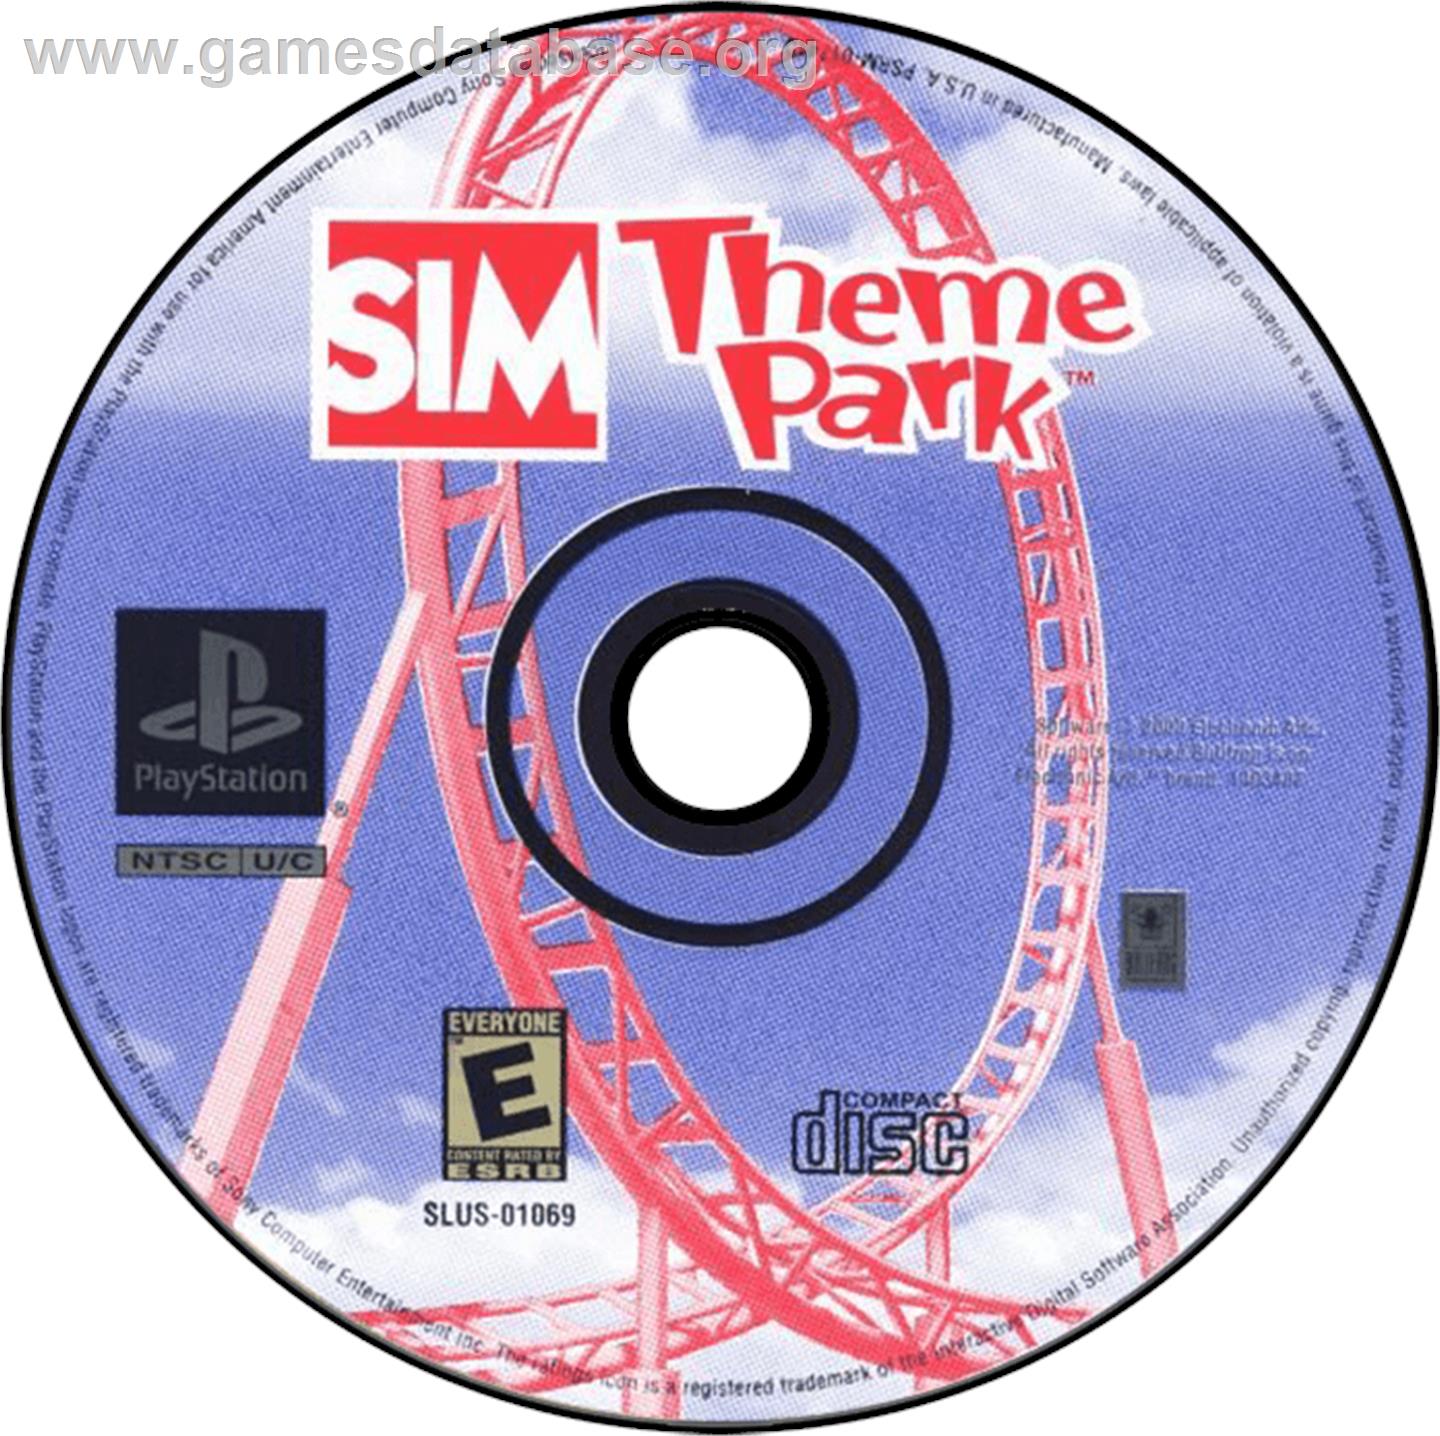 Sim Theme Park - Sony Playstation - Artwork - Disc